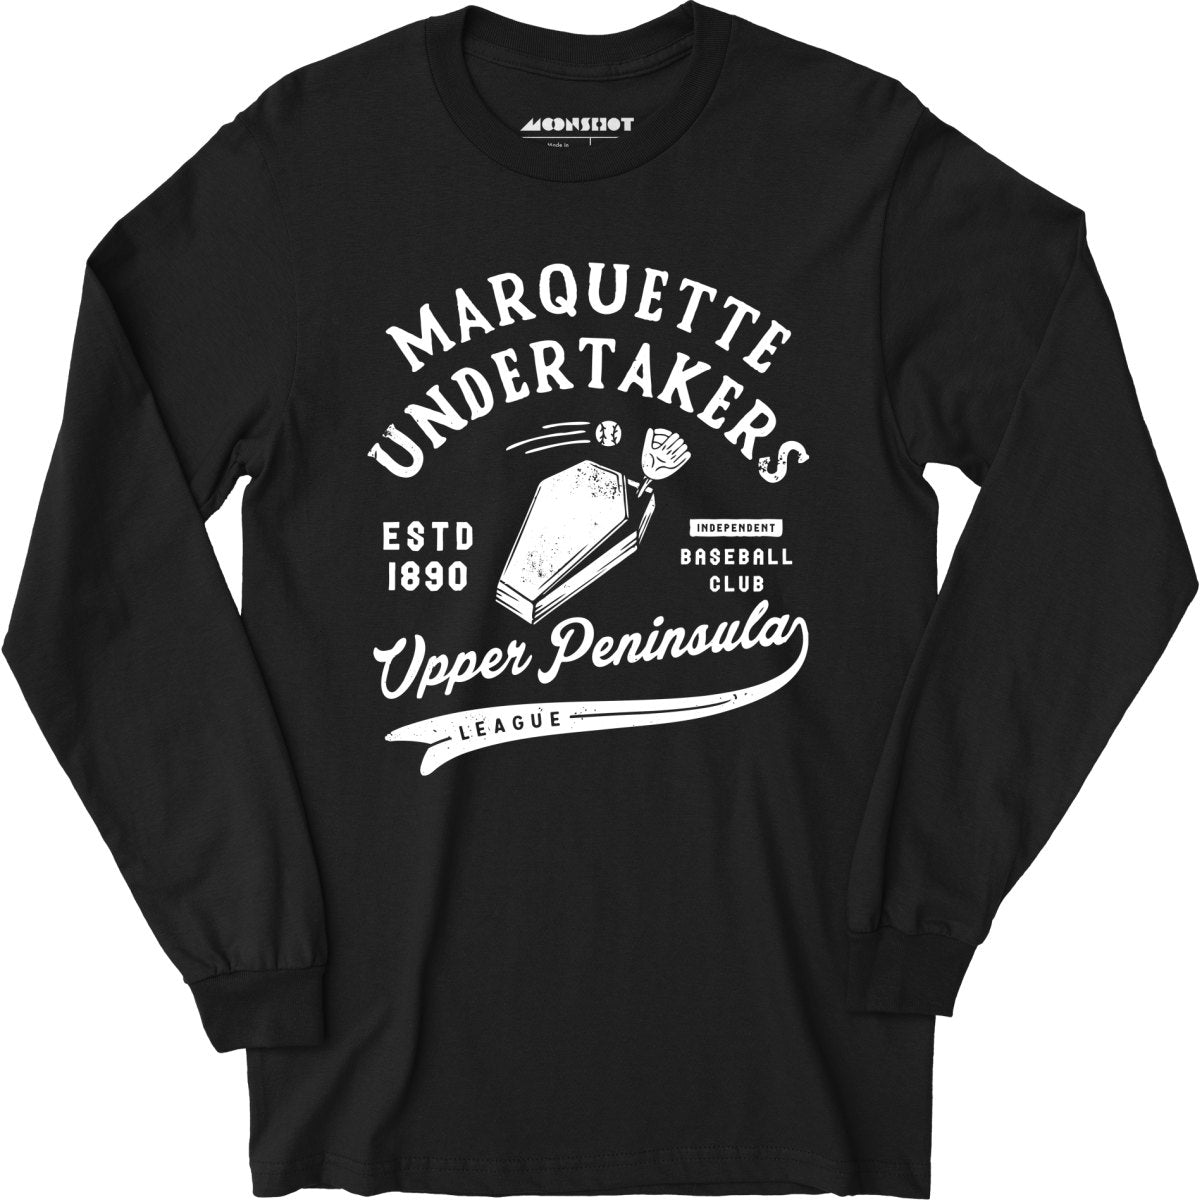 Marquette Undertakers - Michigan - Vintage Defunct Baseball Teams - Long Sleeve T-Shirt